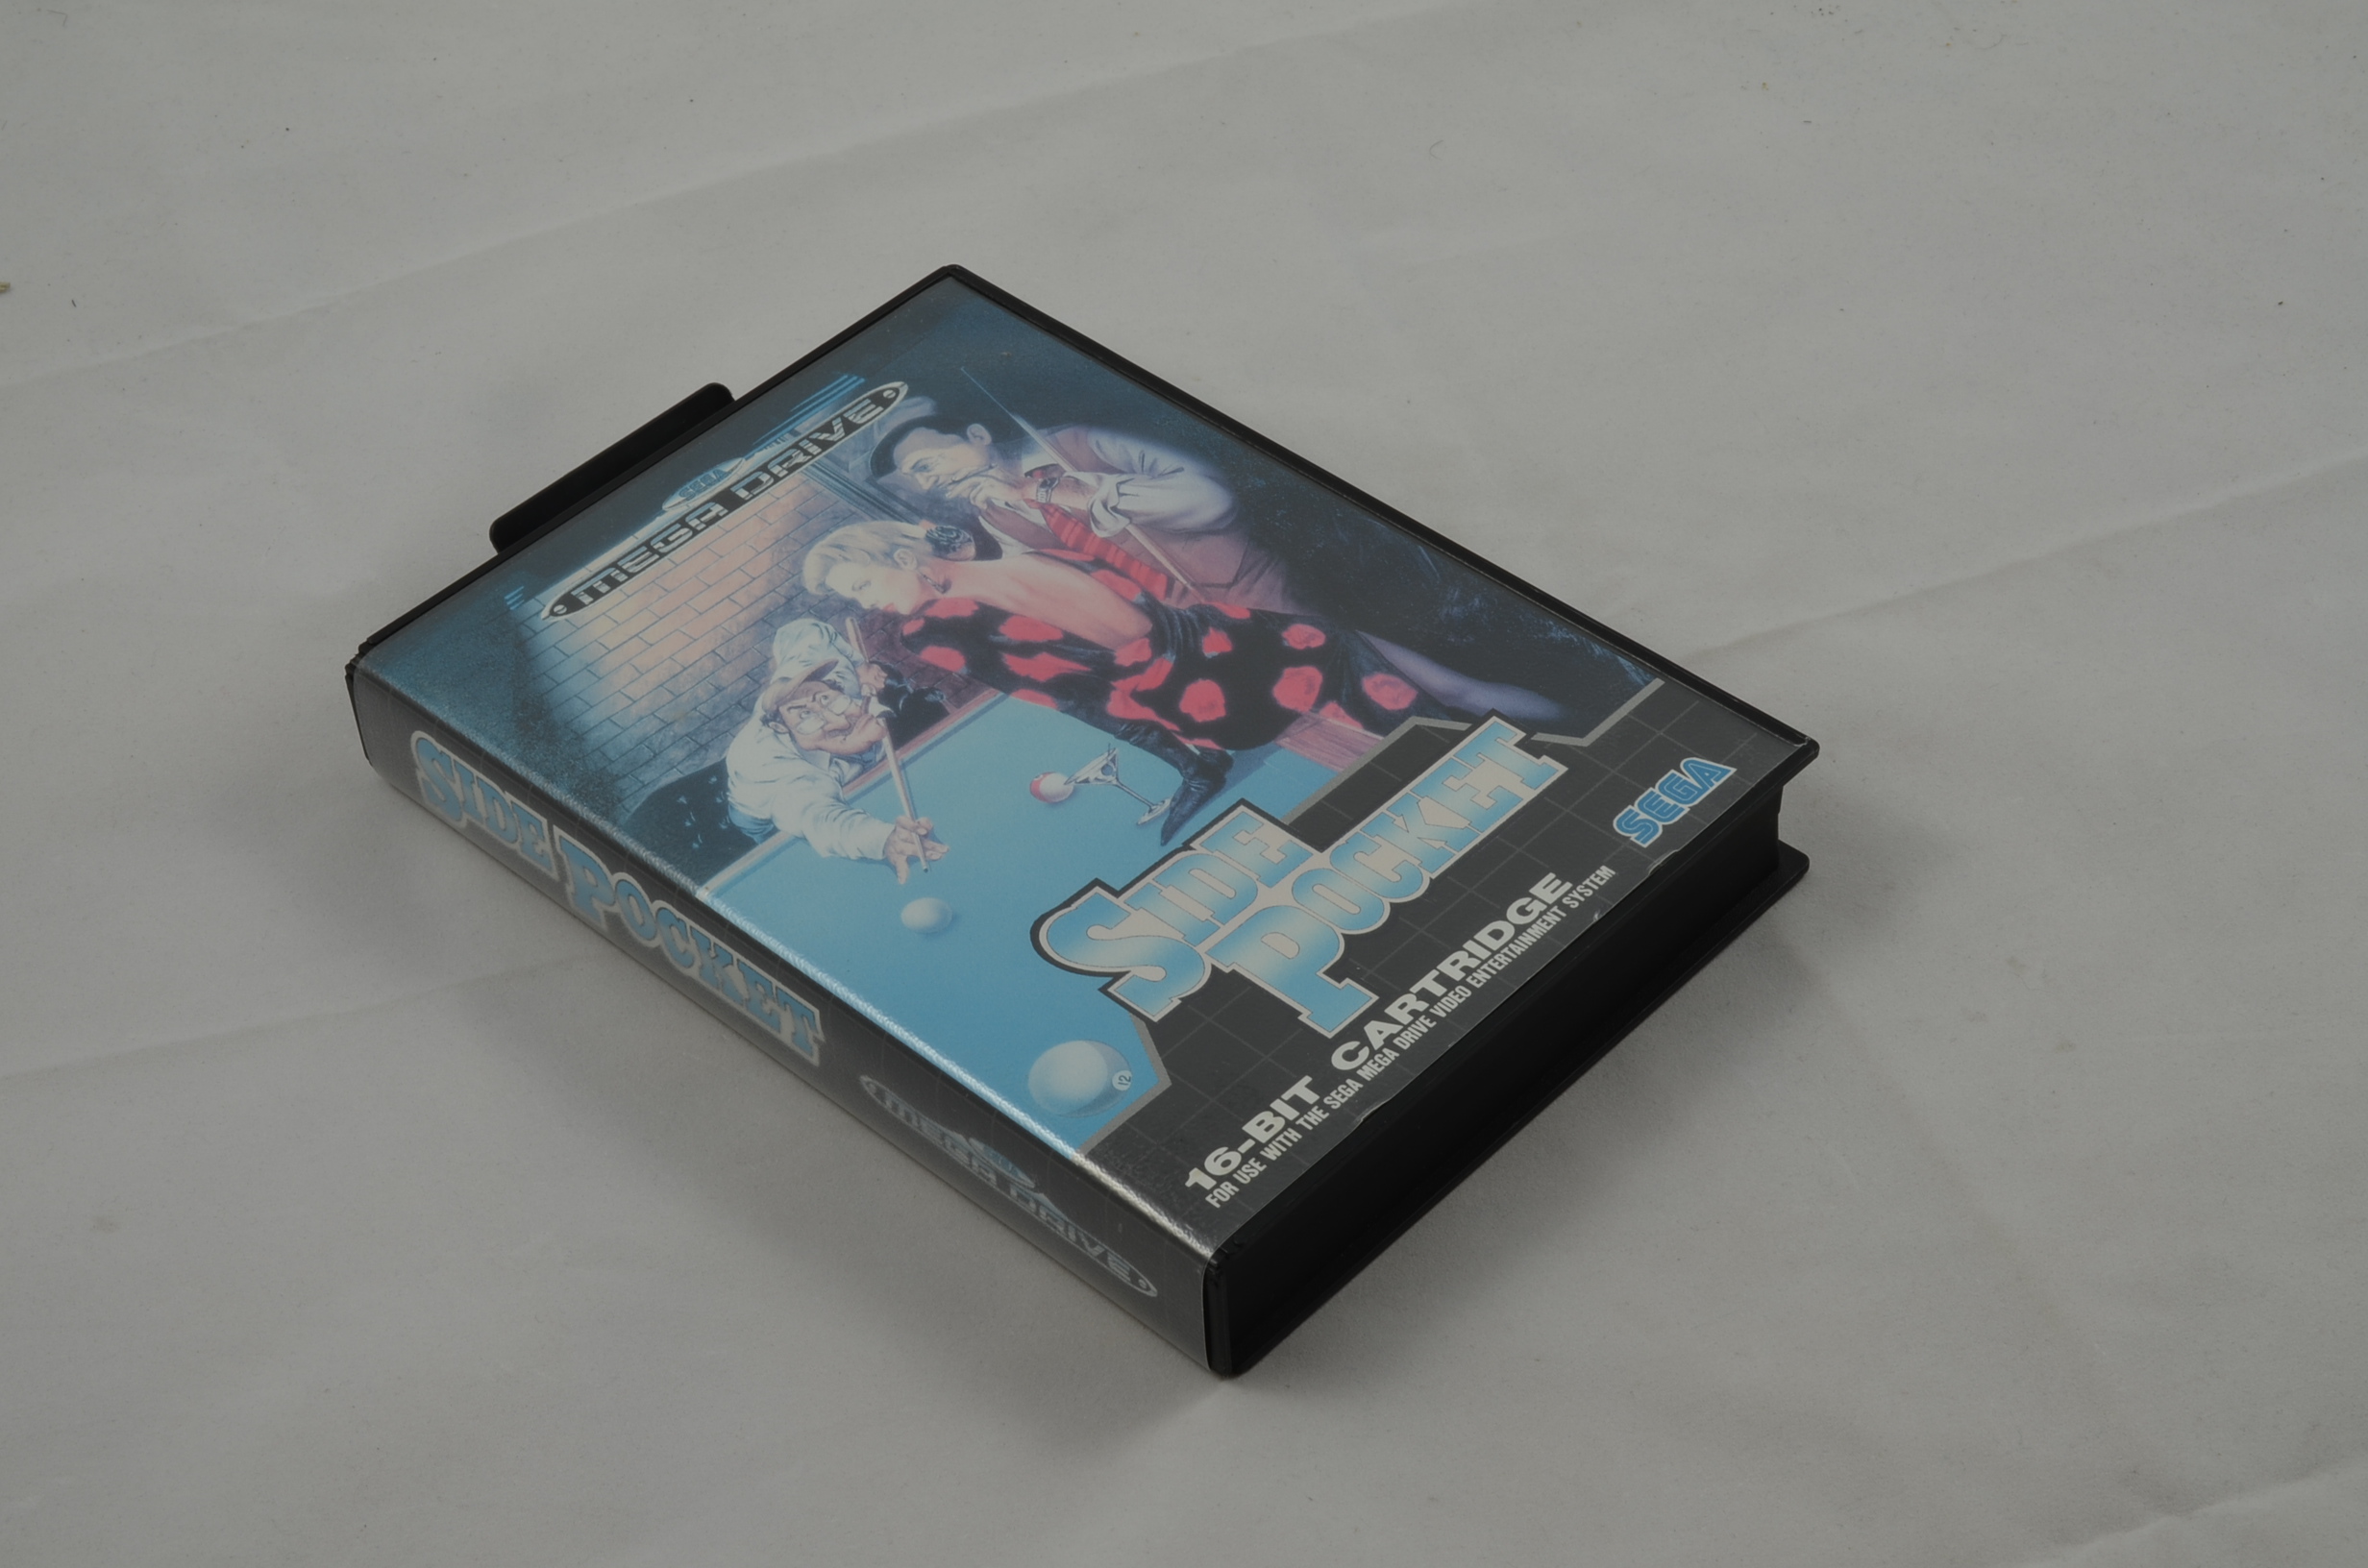 Produktbild von Side Pocket Sega Mega Drive Spiel CIB (gut)